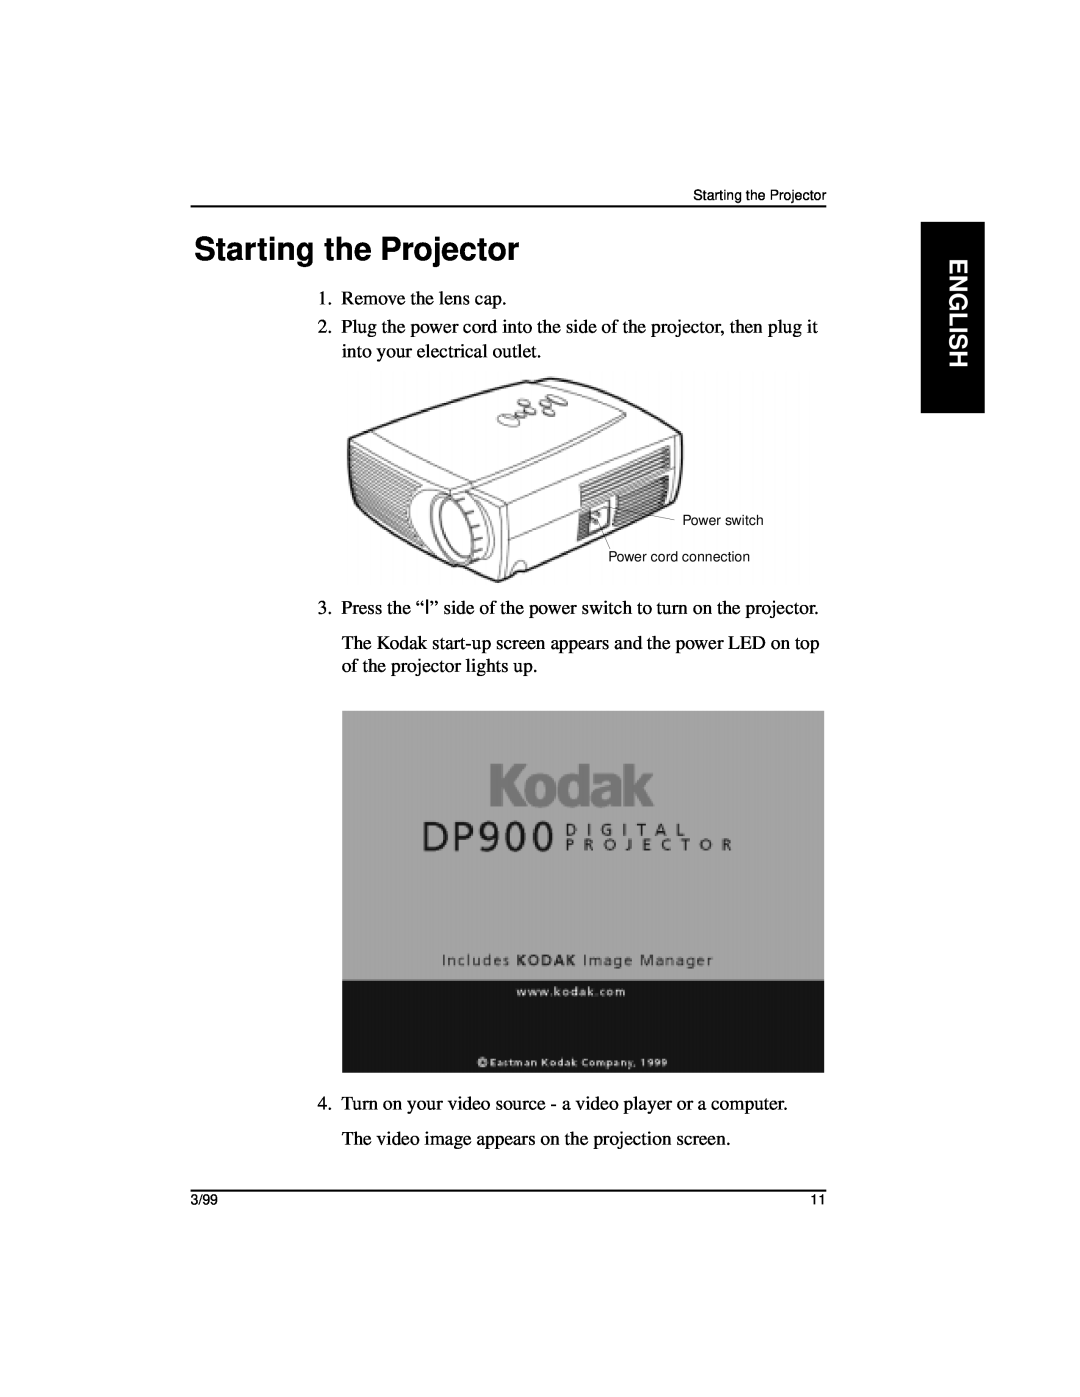 Kodak DP1100, DP900 manual Starting the Projector, English 